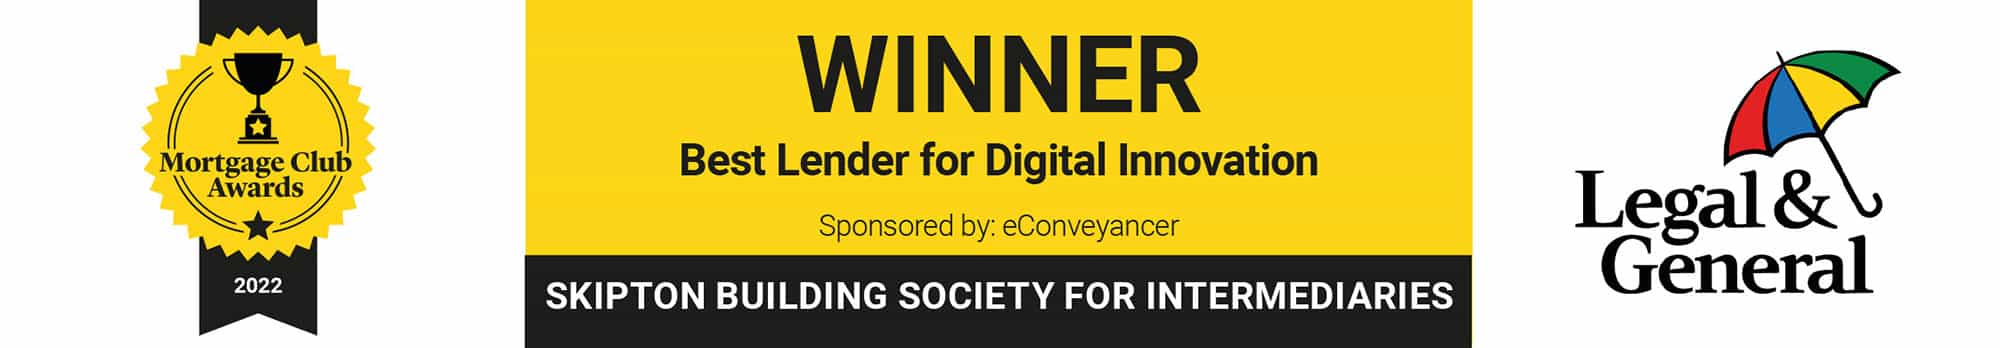 Best Lender for Digital Innovation - Mortgage Club Awards 2022